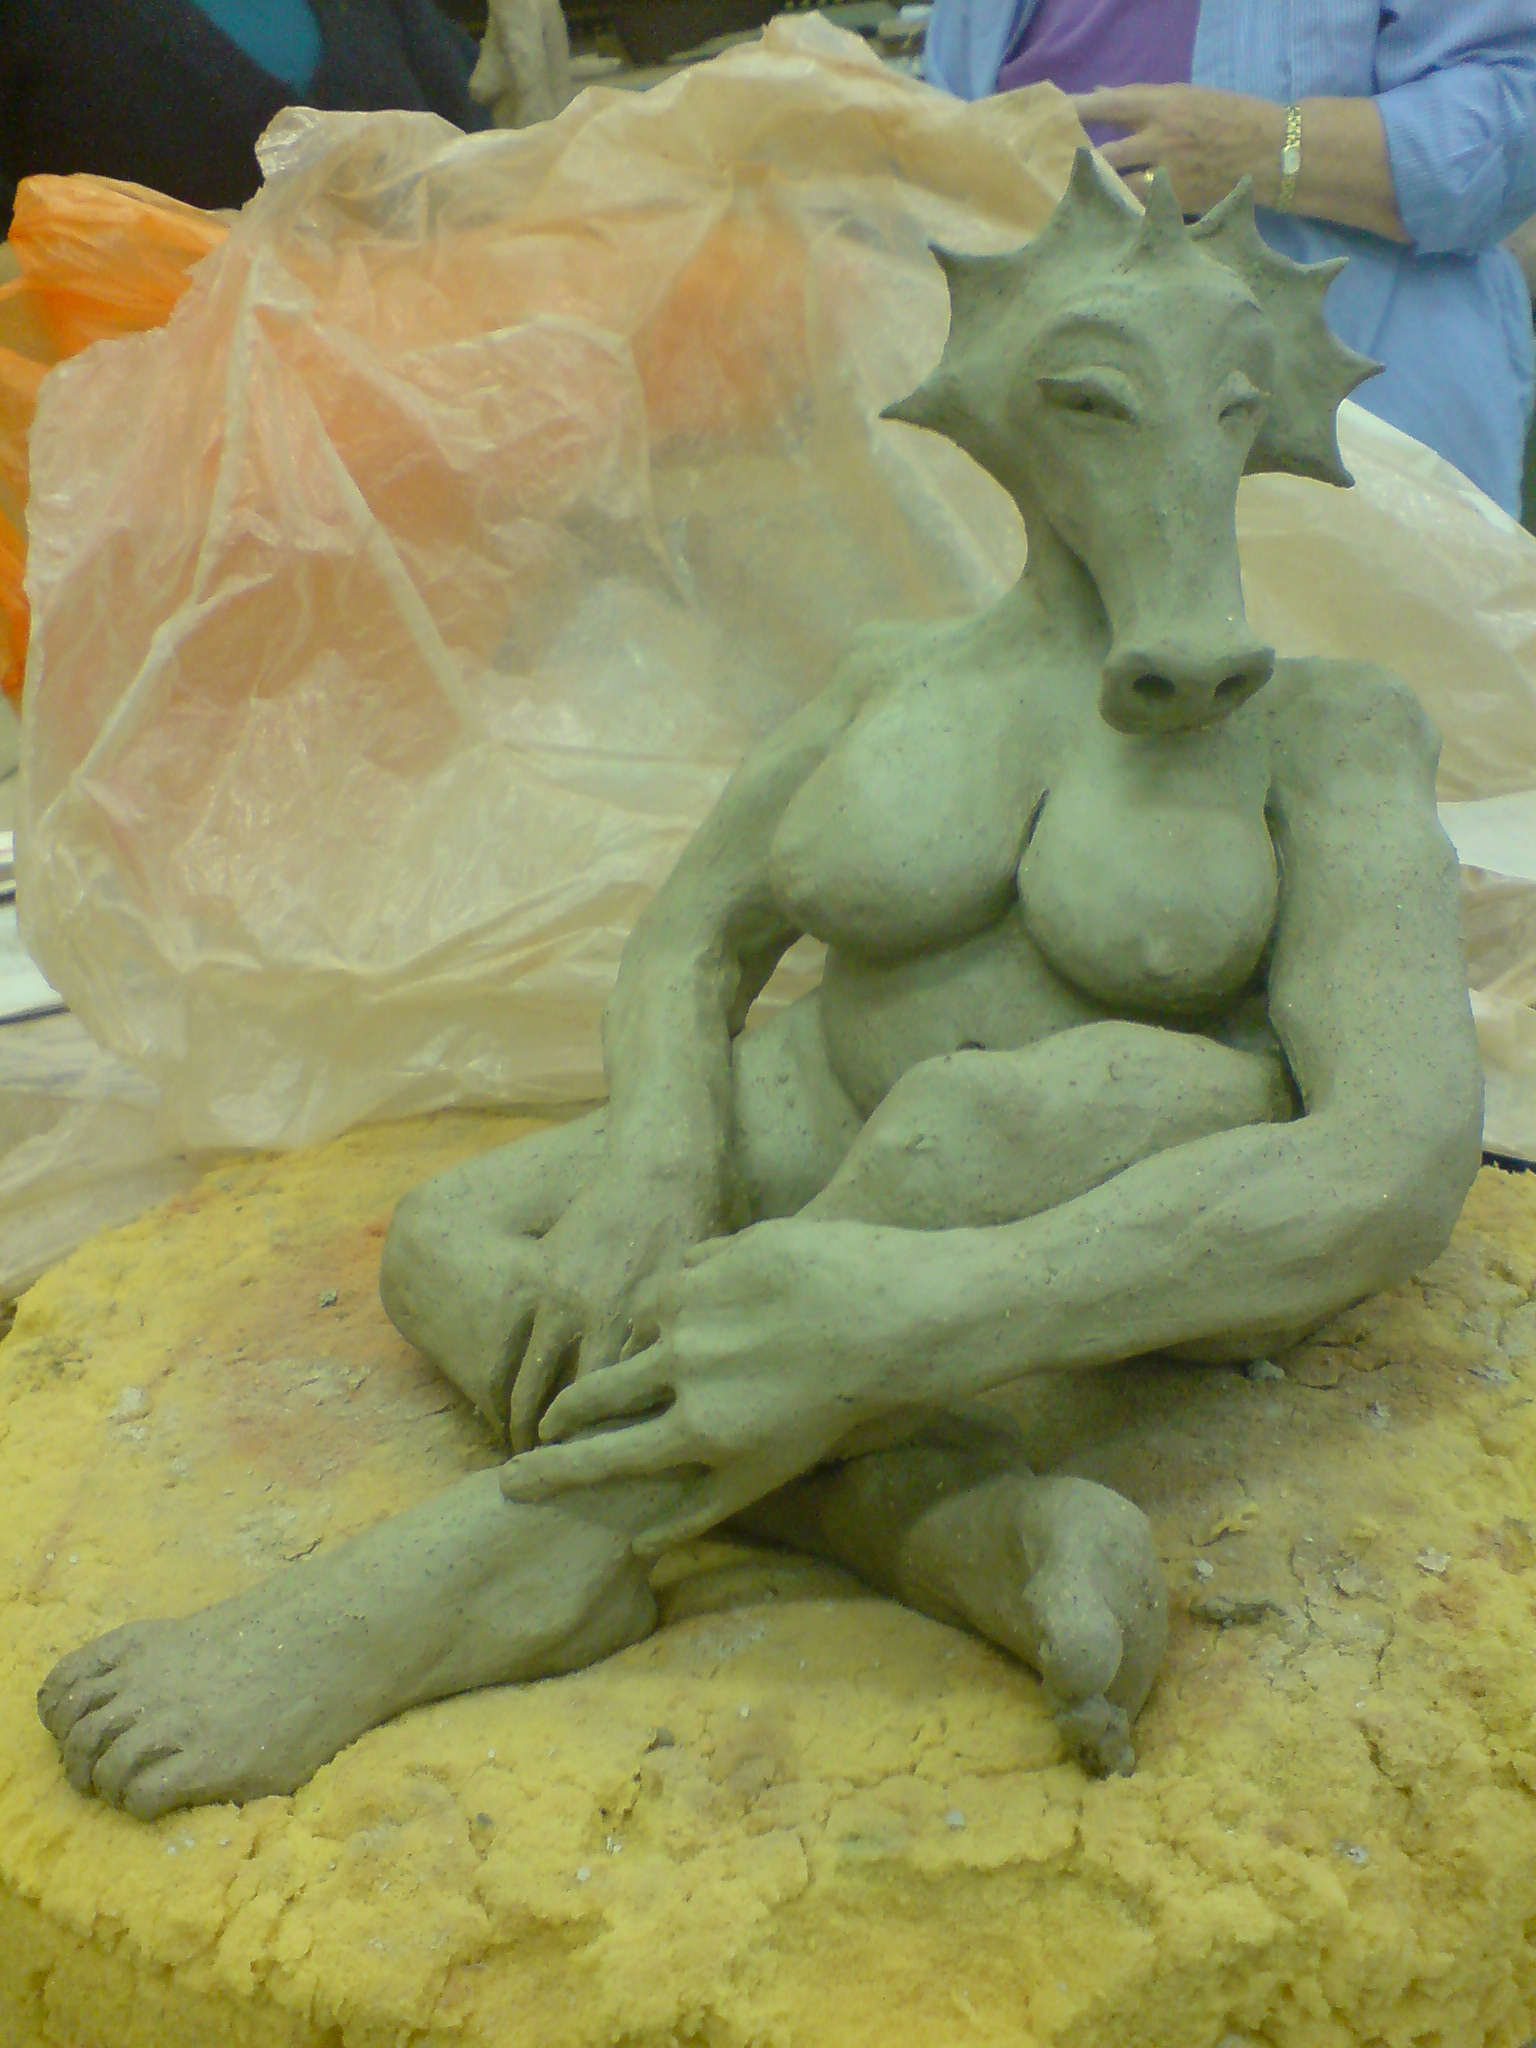  'Dragon lady' by CJ Munn (work in progress) - sold. 